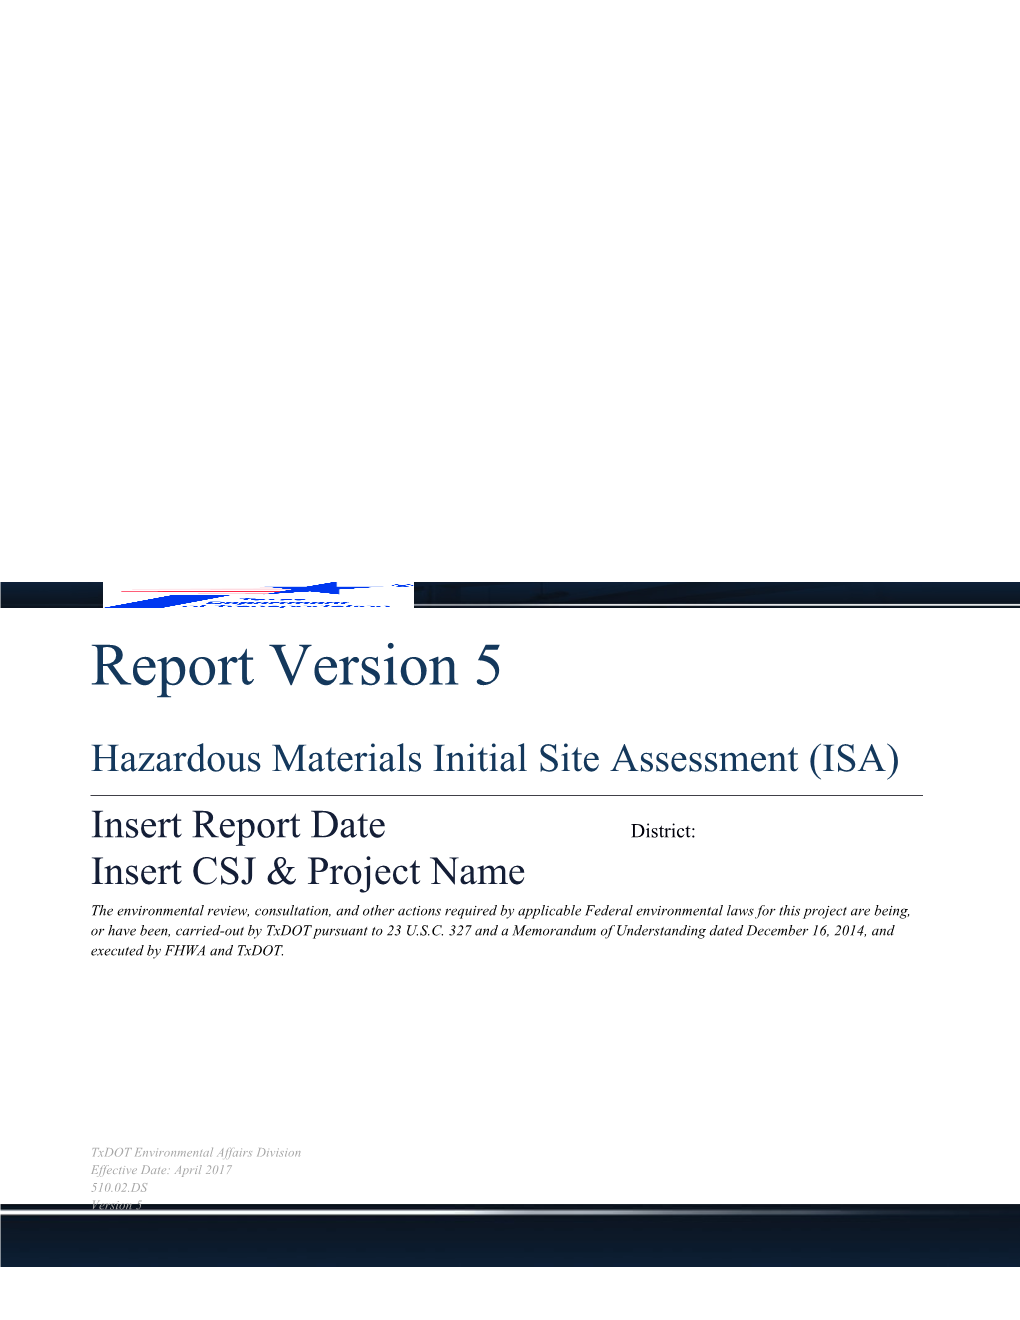 Hazardous Materials Initial Site Assessment (ISA) Report